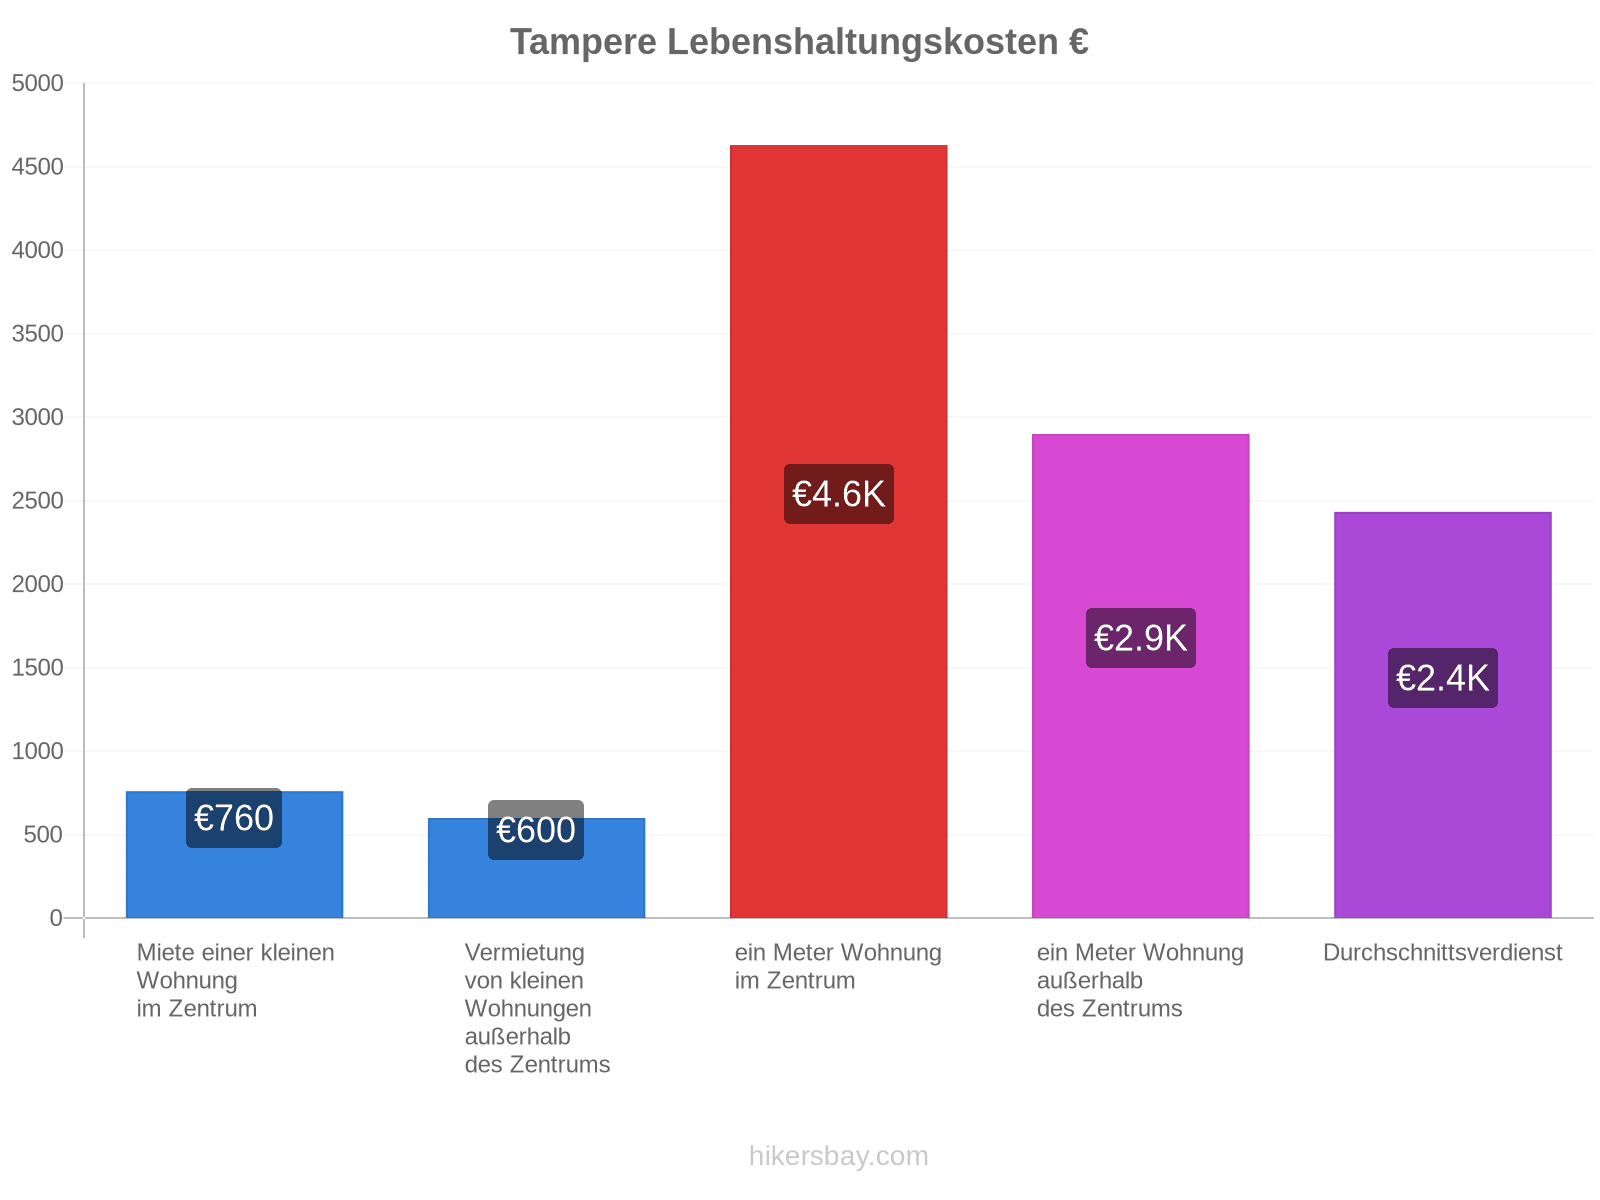 Tampere Lebenshaltungskosten hikersbay.com